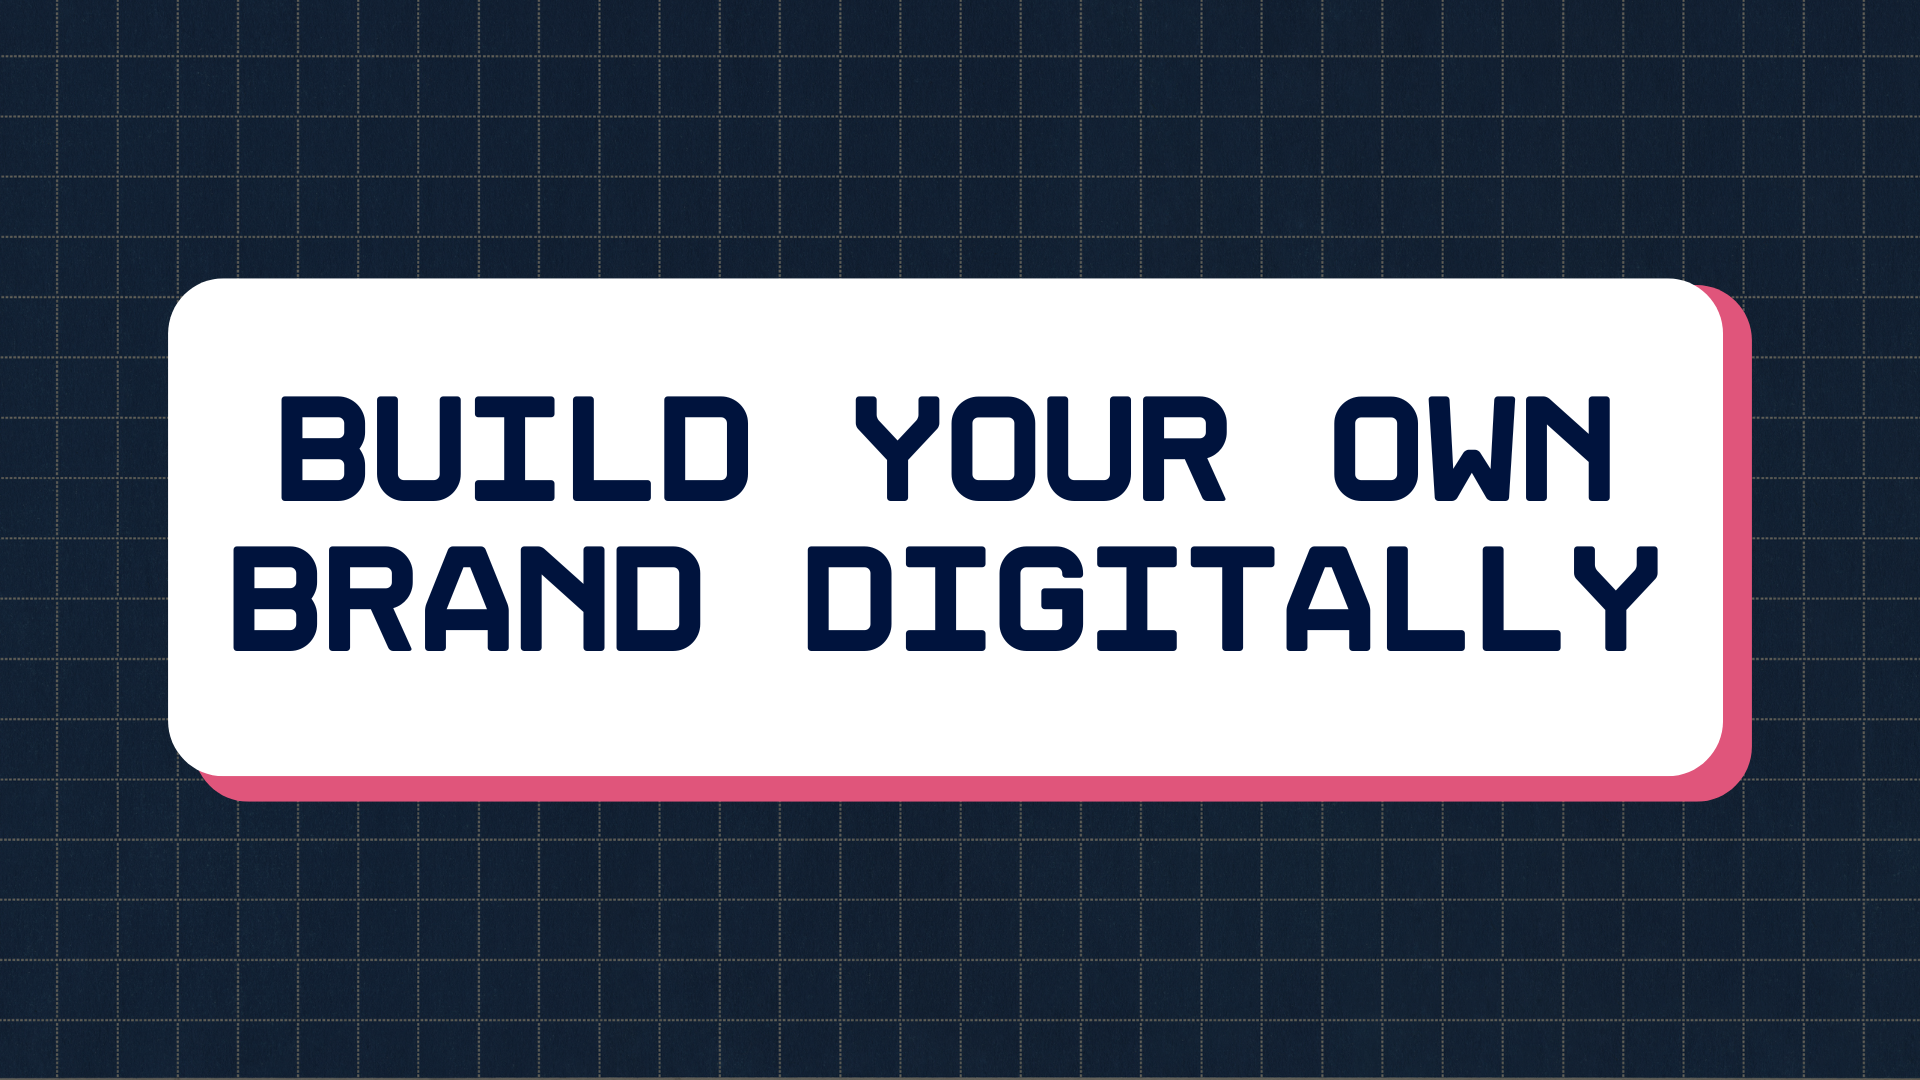 Build your own brand digitally - ONLINE WORKSHOP